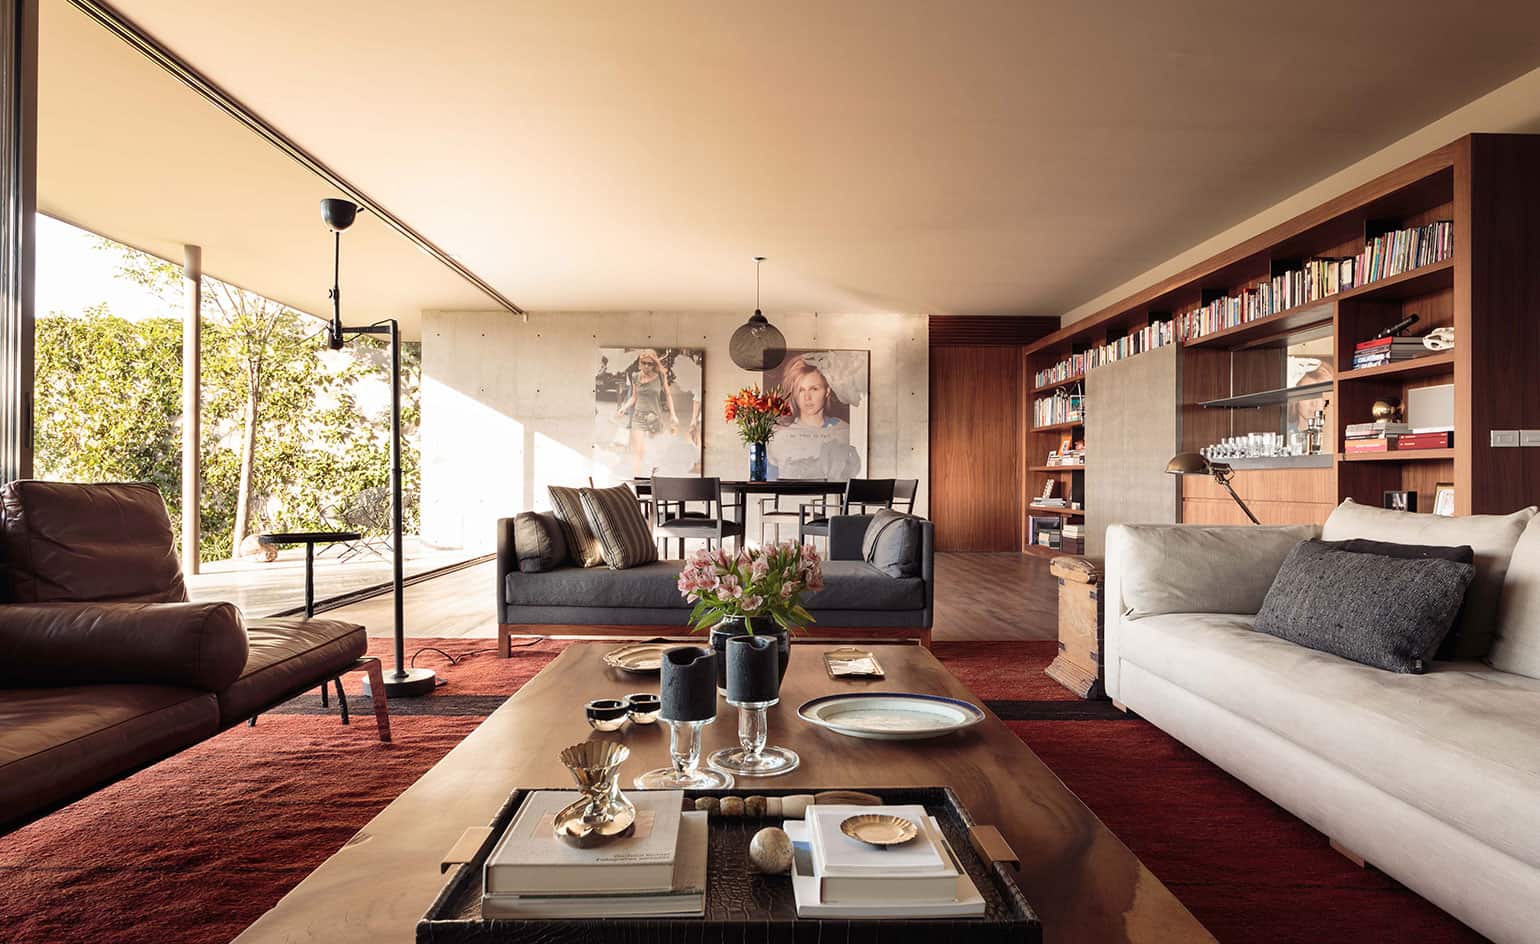 modernist house mexico city - Casa Caucaso - Jose Juan Rivera Rio architect - living room